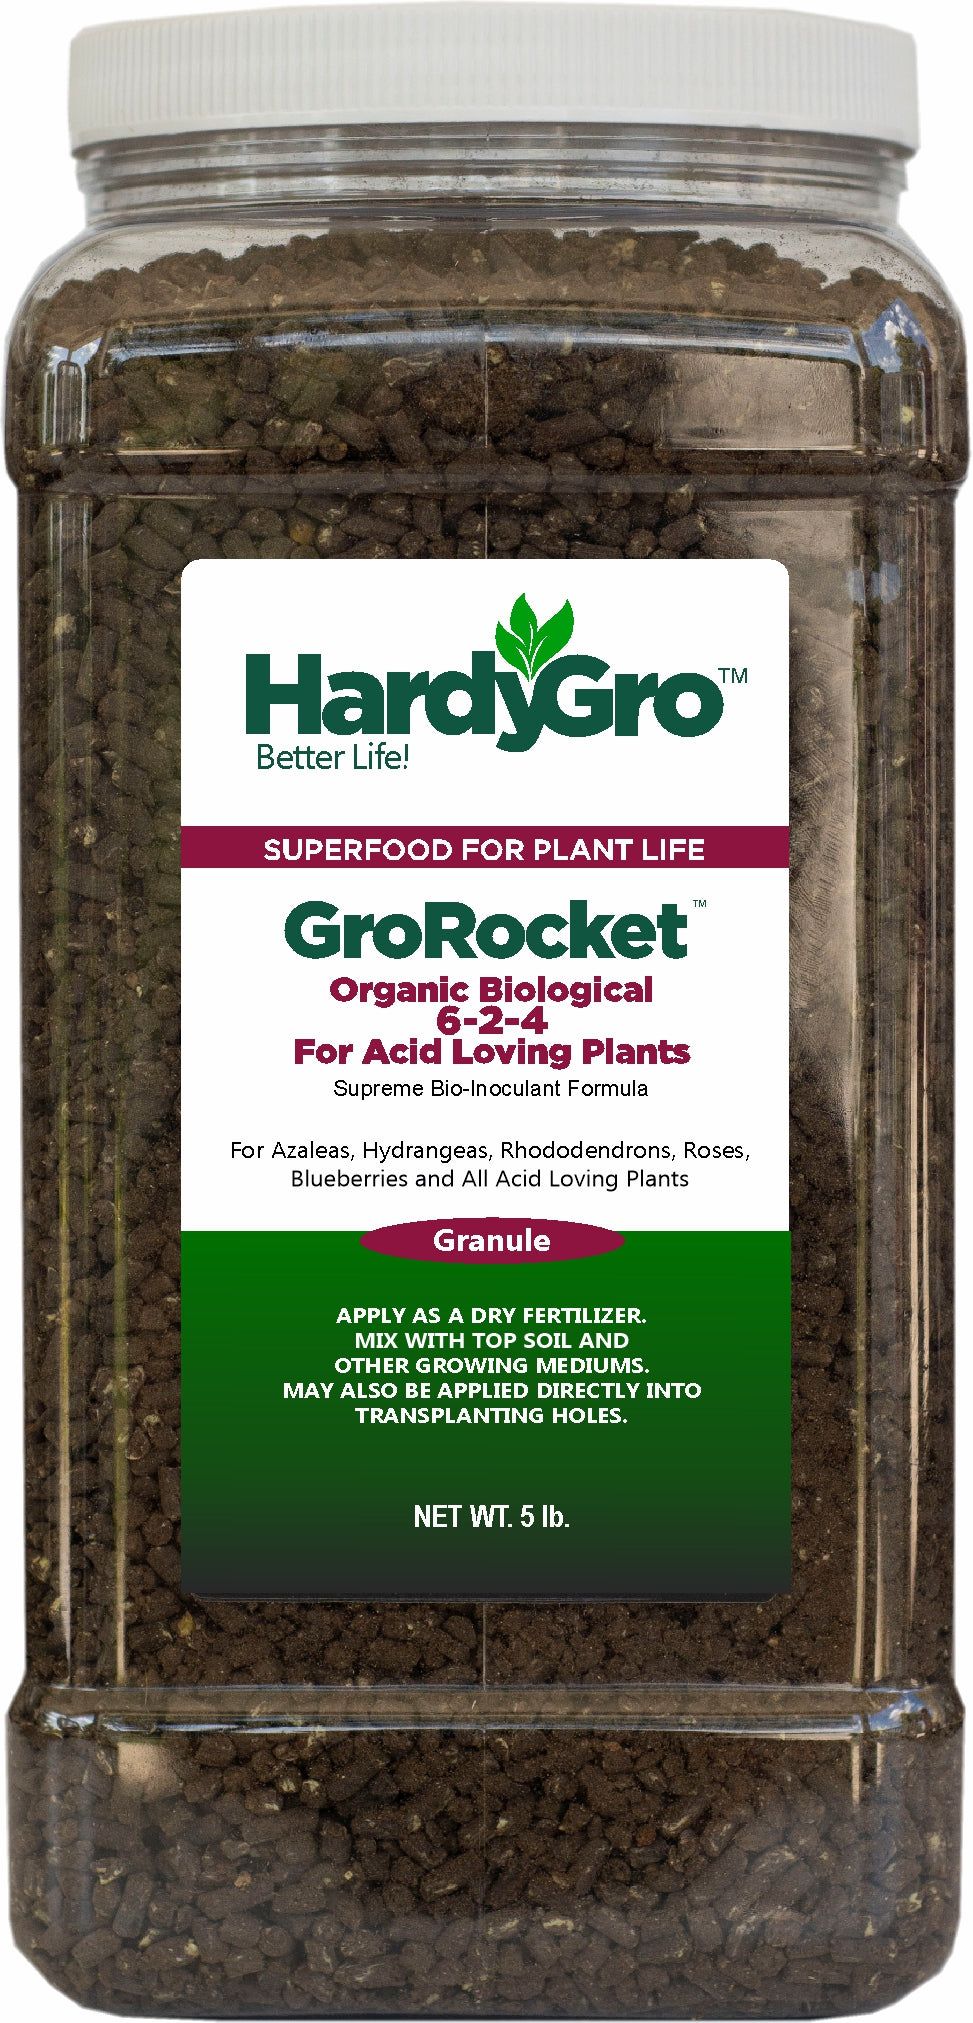 GroRocket dry organic fertilizer + soil microbes 6-2-4, 5lb